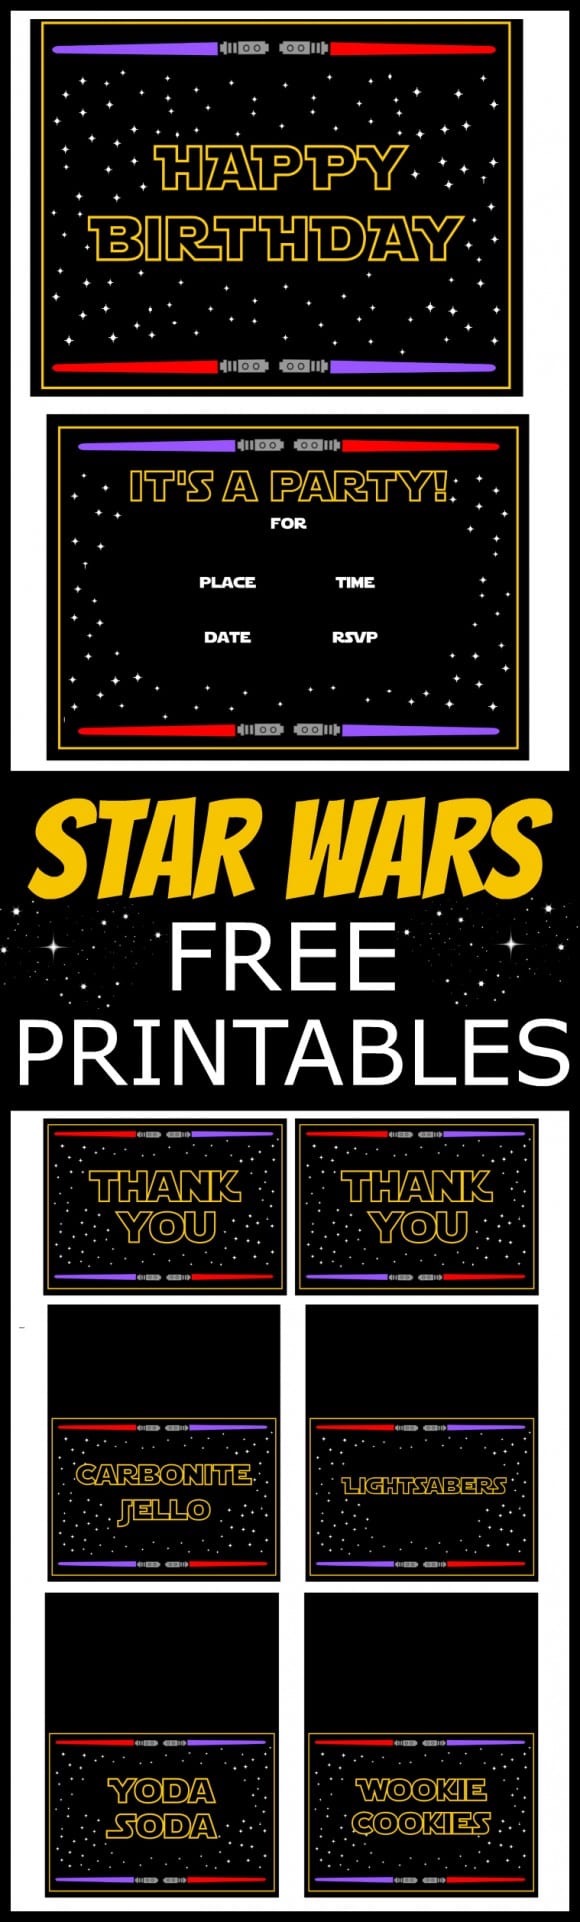 Star Wars Free Printables | CatchMyParty.com